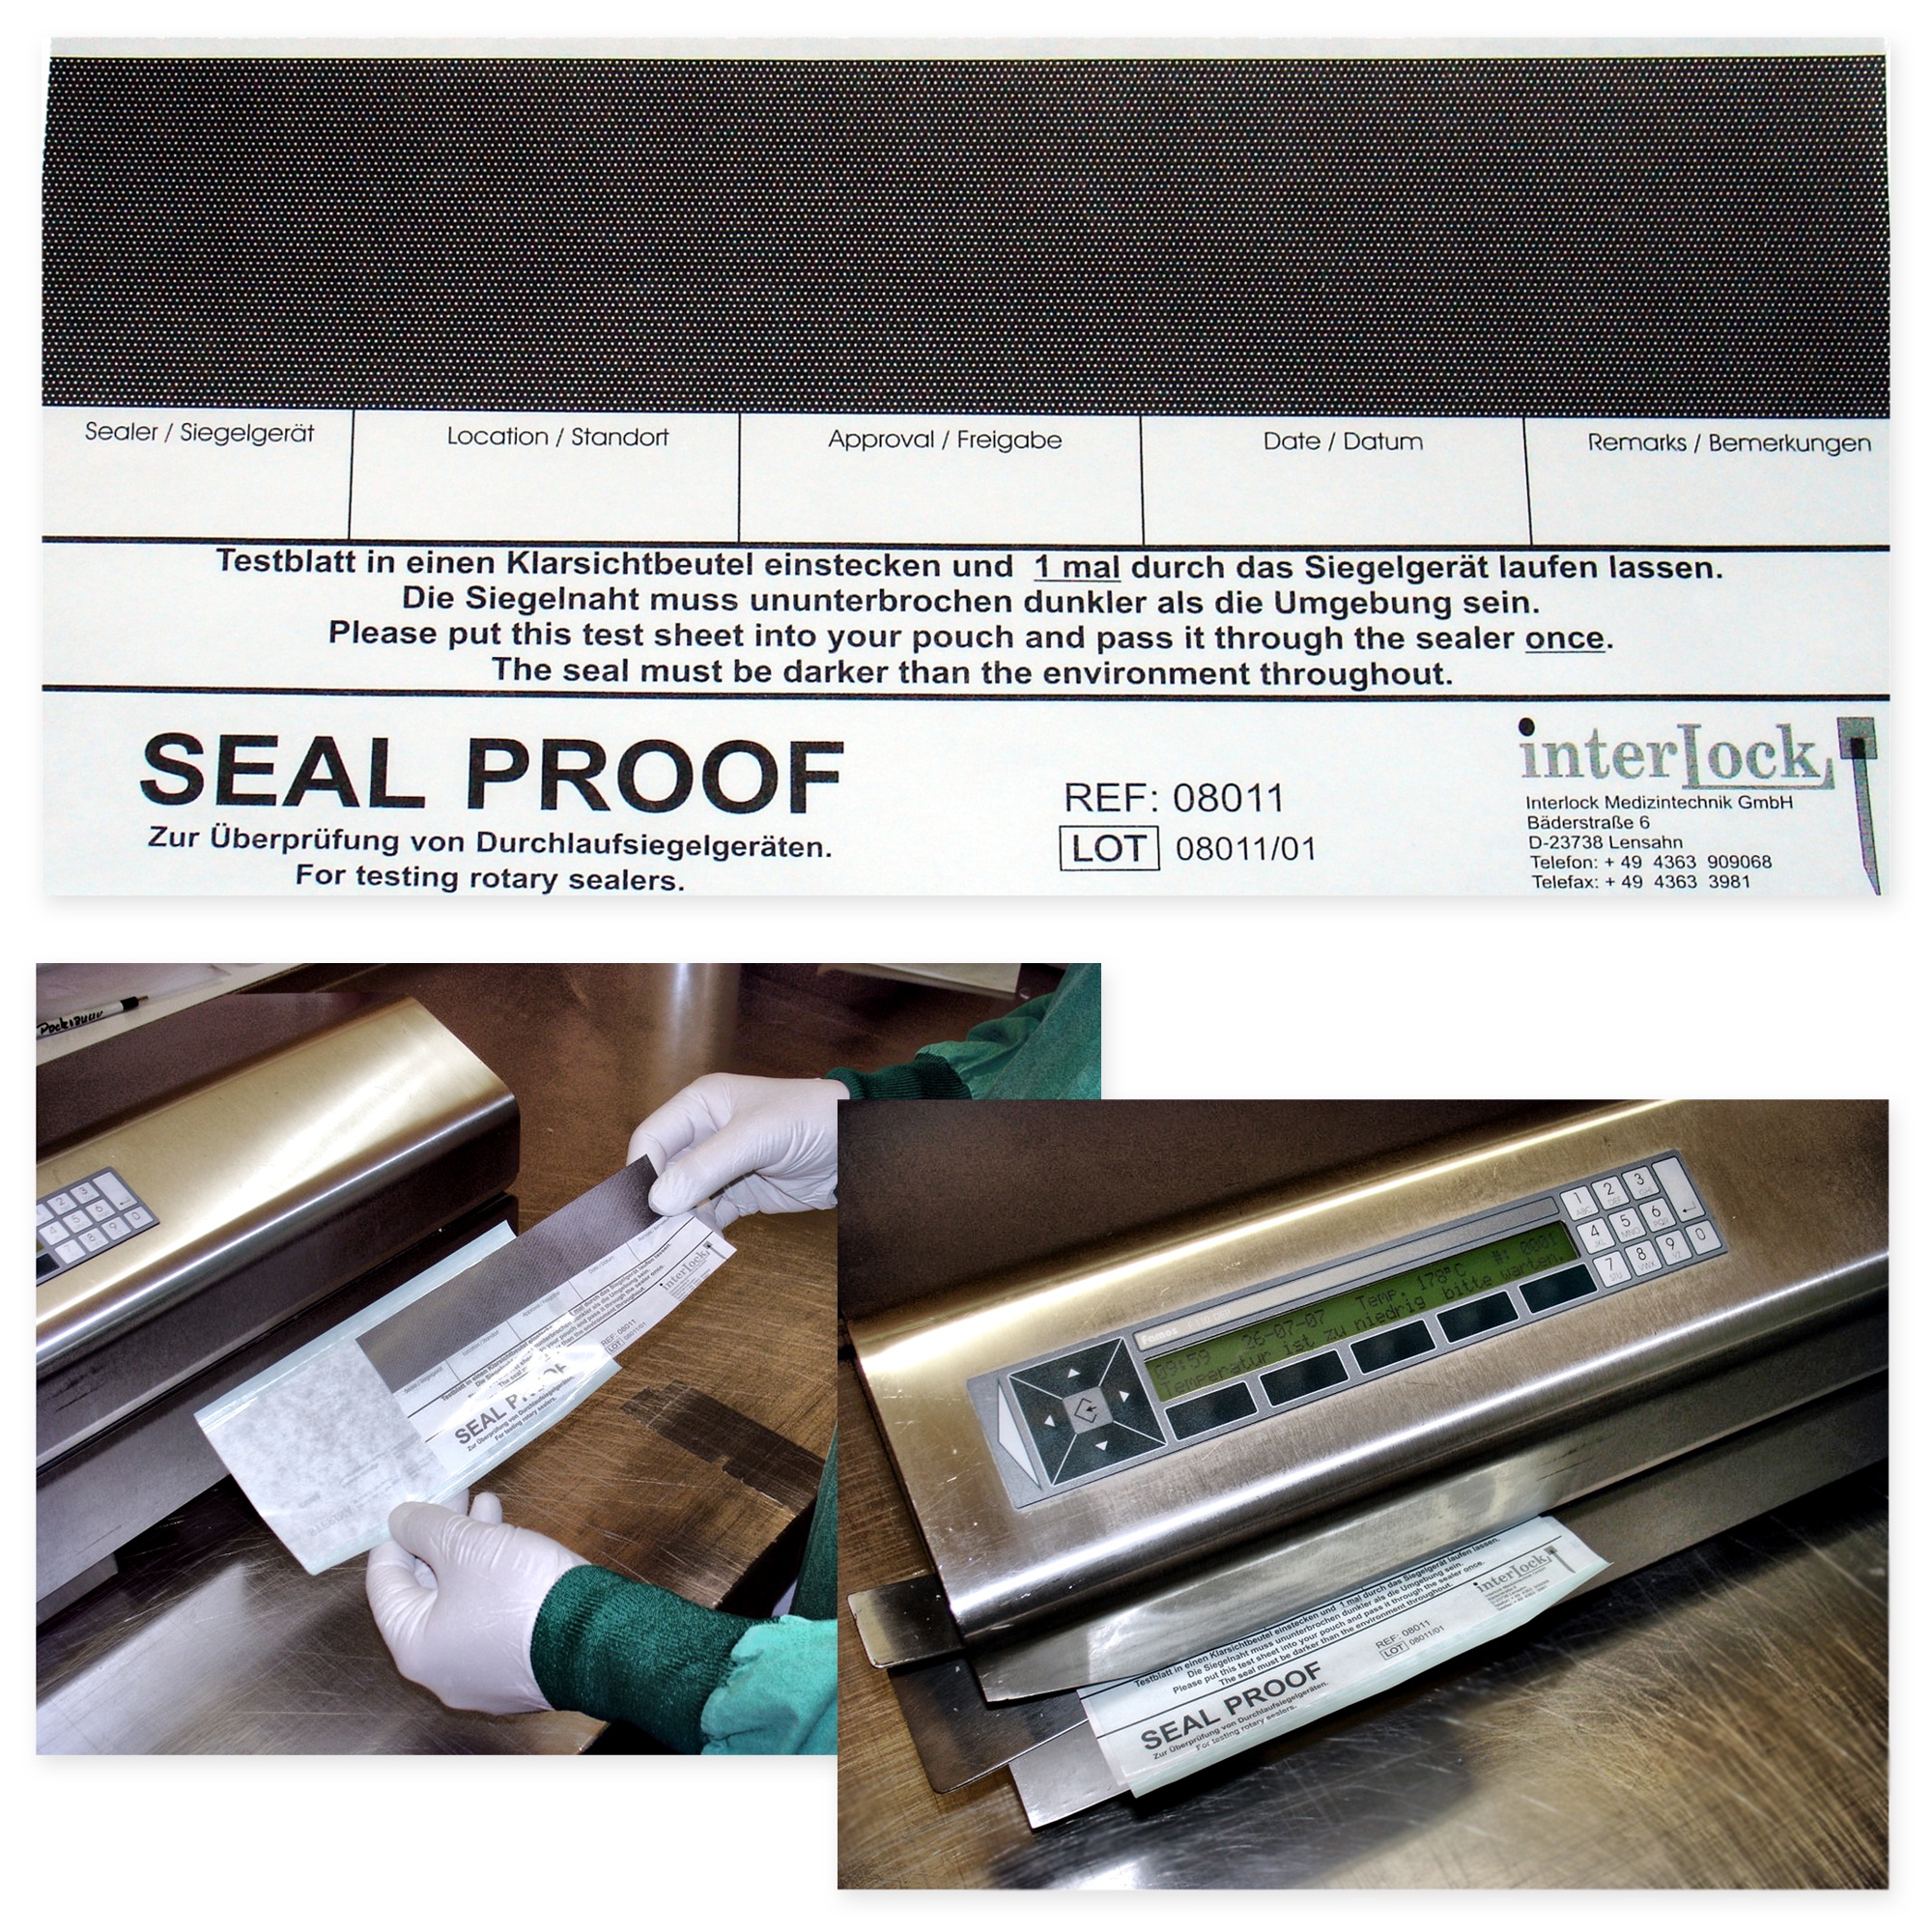 Interlock SEAL PROOF - geeignet für Tyvekbeutel Image